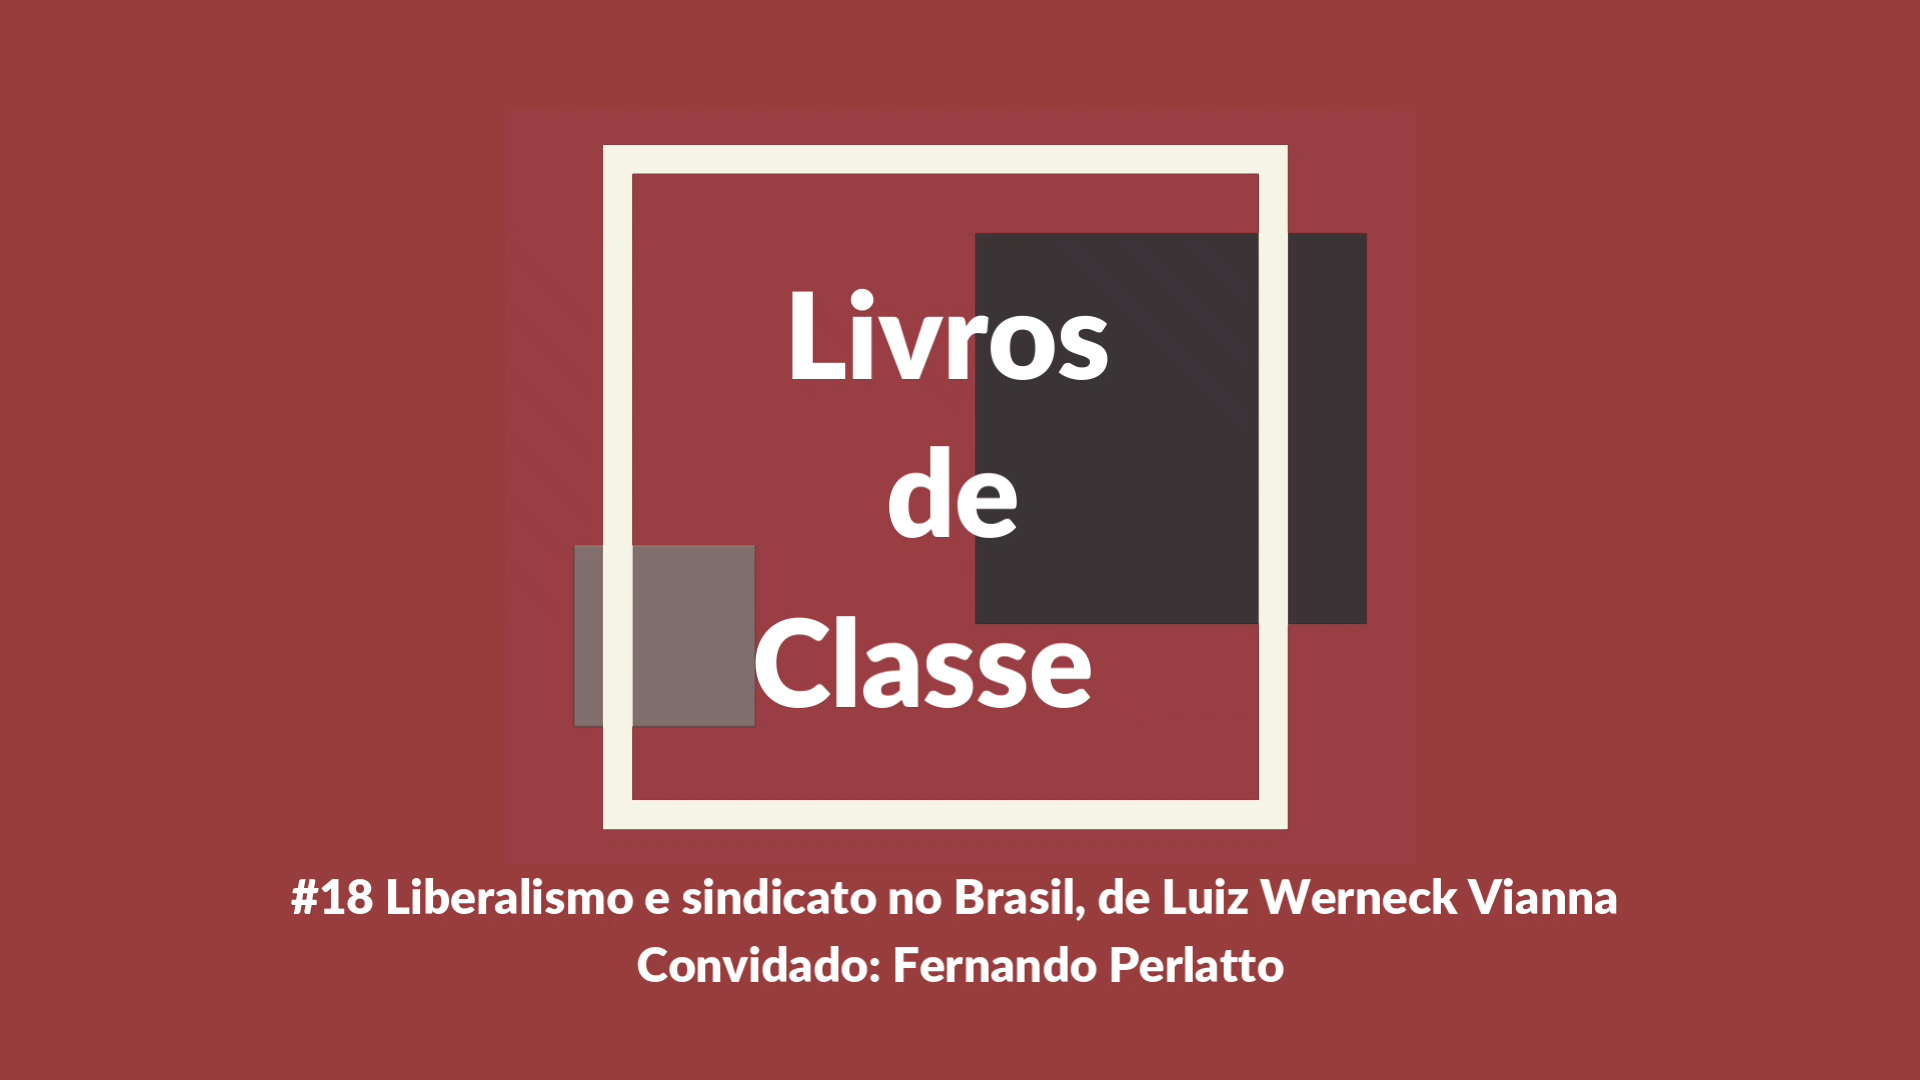 Livros de Classe #18:  Liberalismo e sindicato no Brasil, de Luiz Werneck Vianna, por Fernando Perlatto